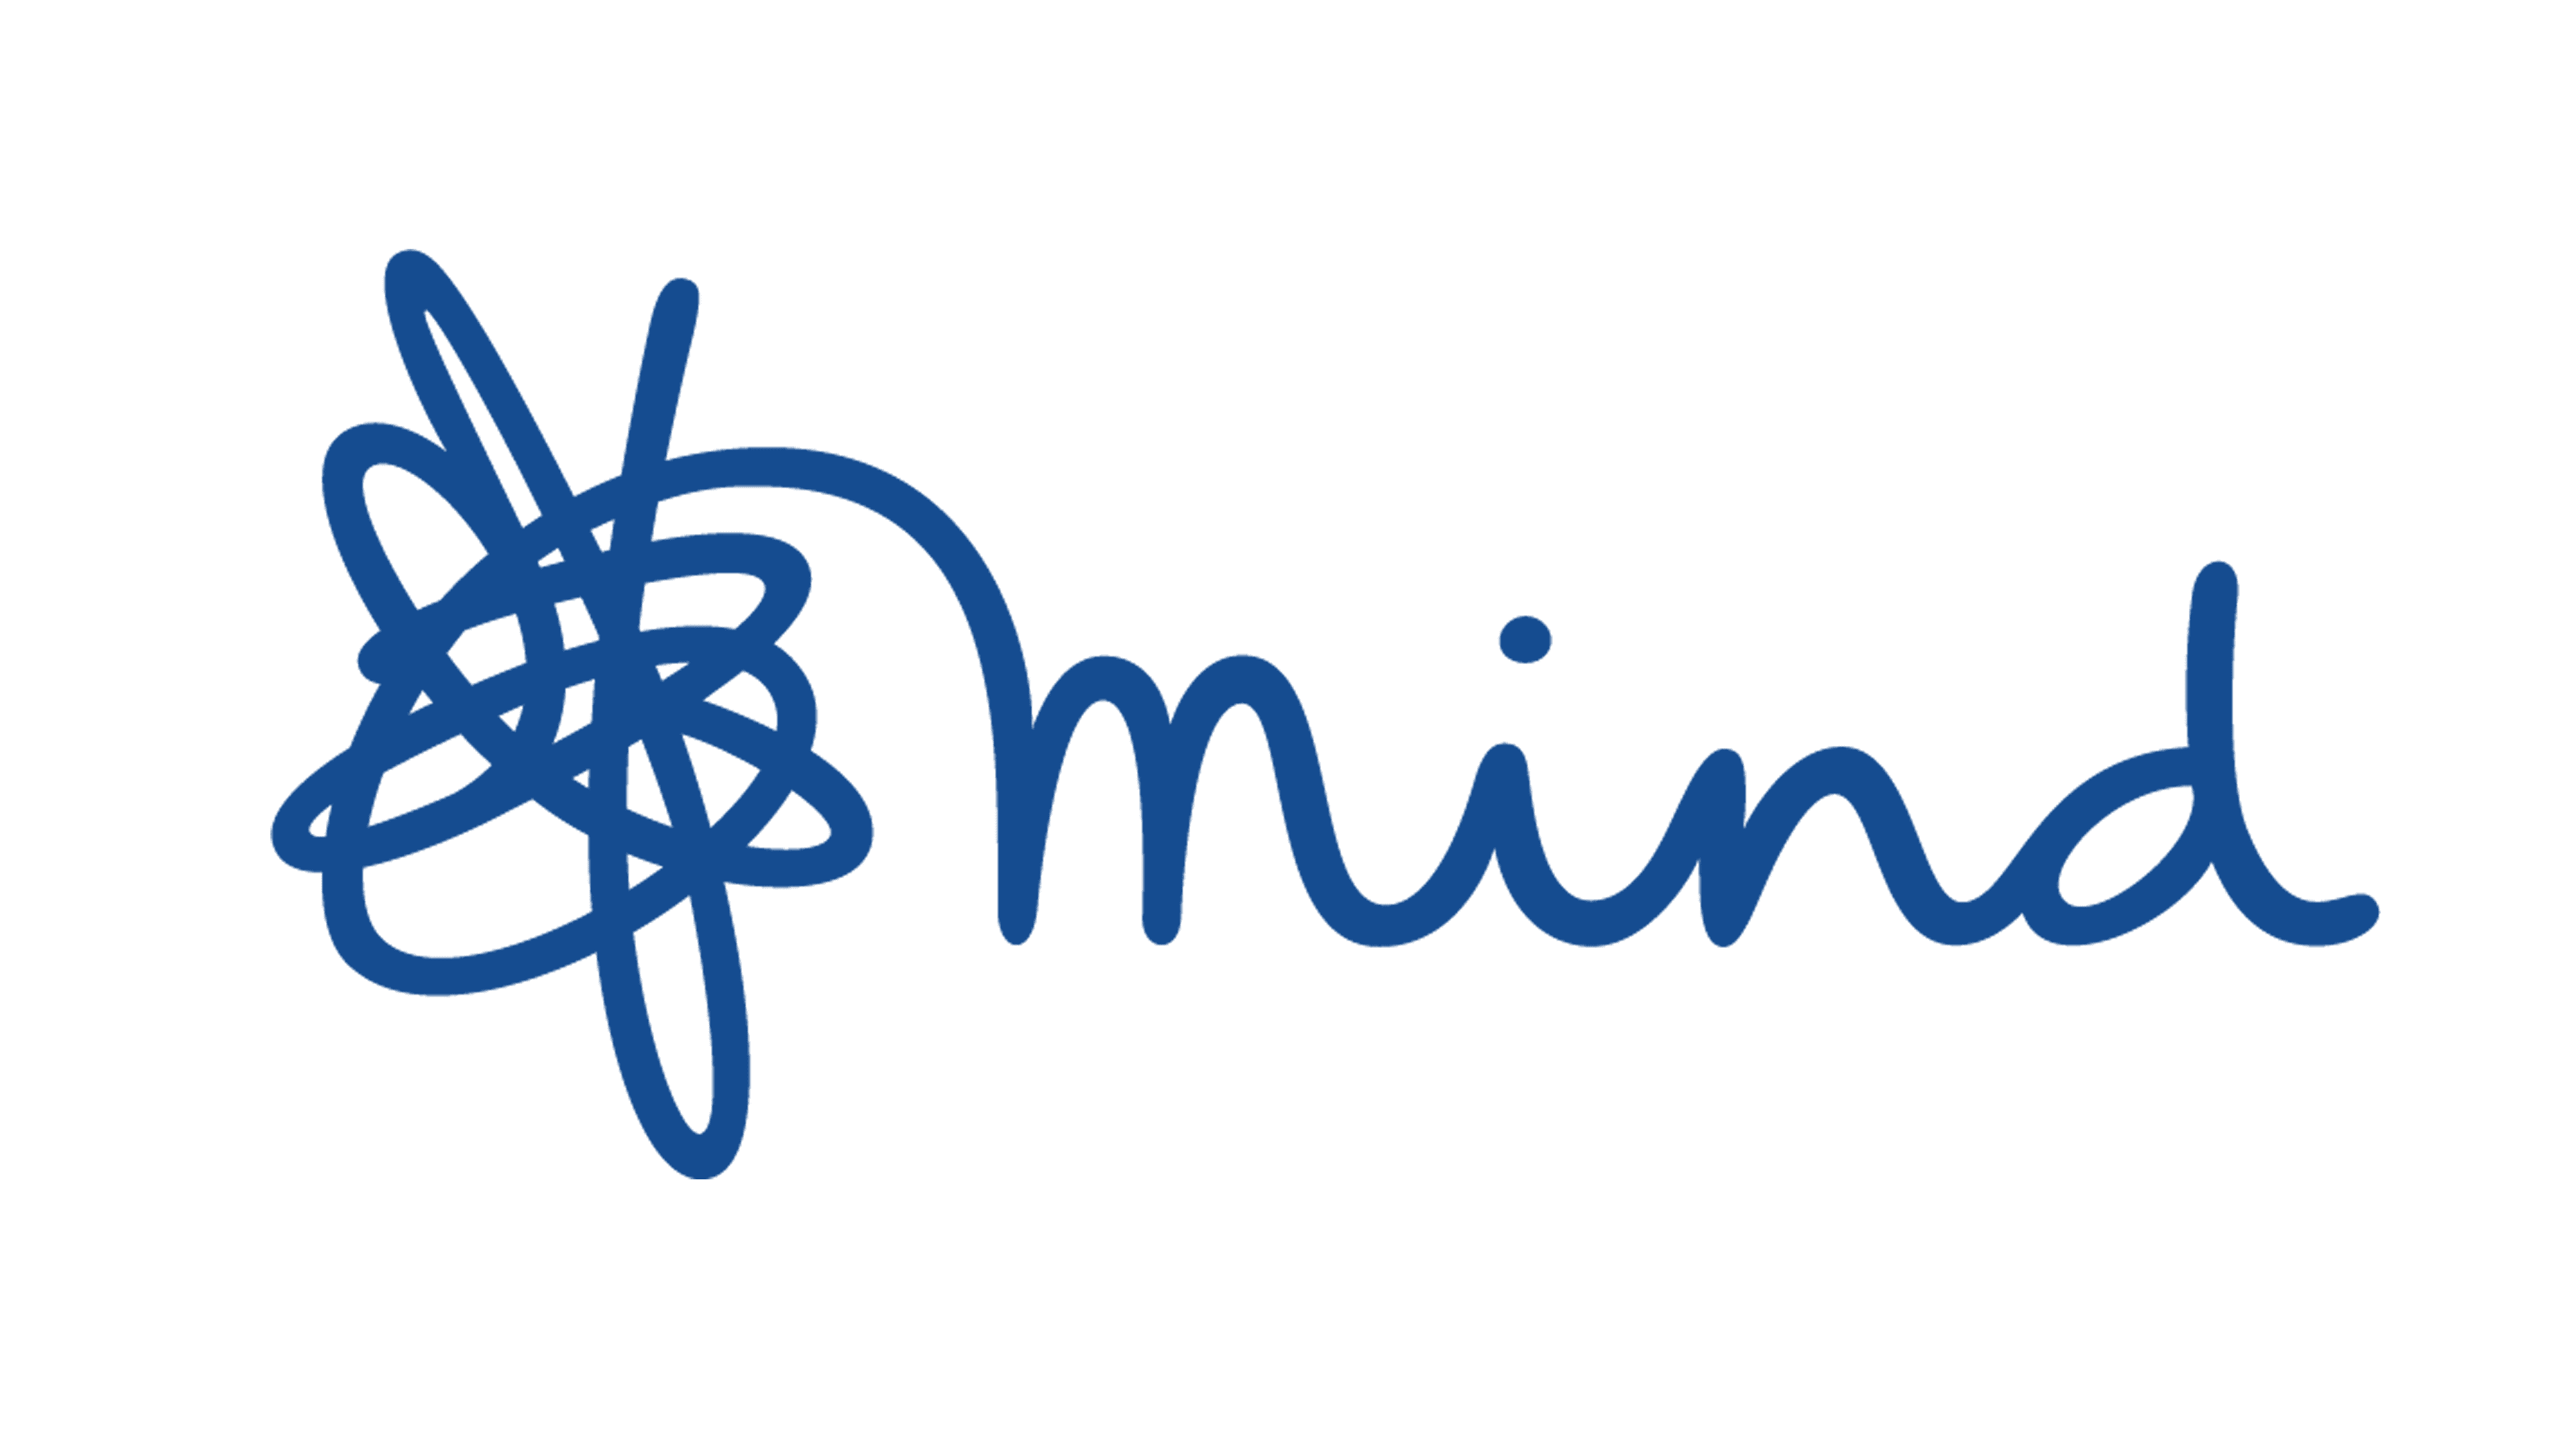 Mind-logo